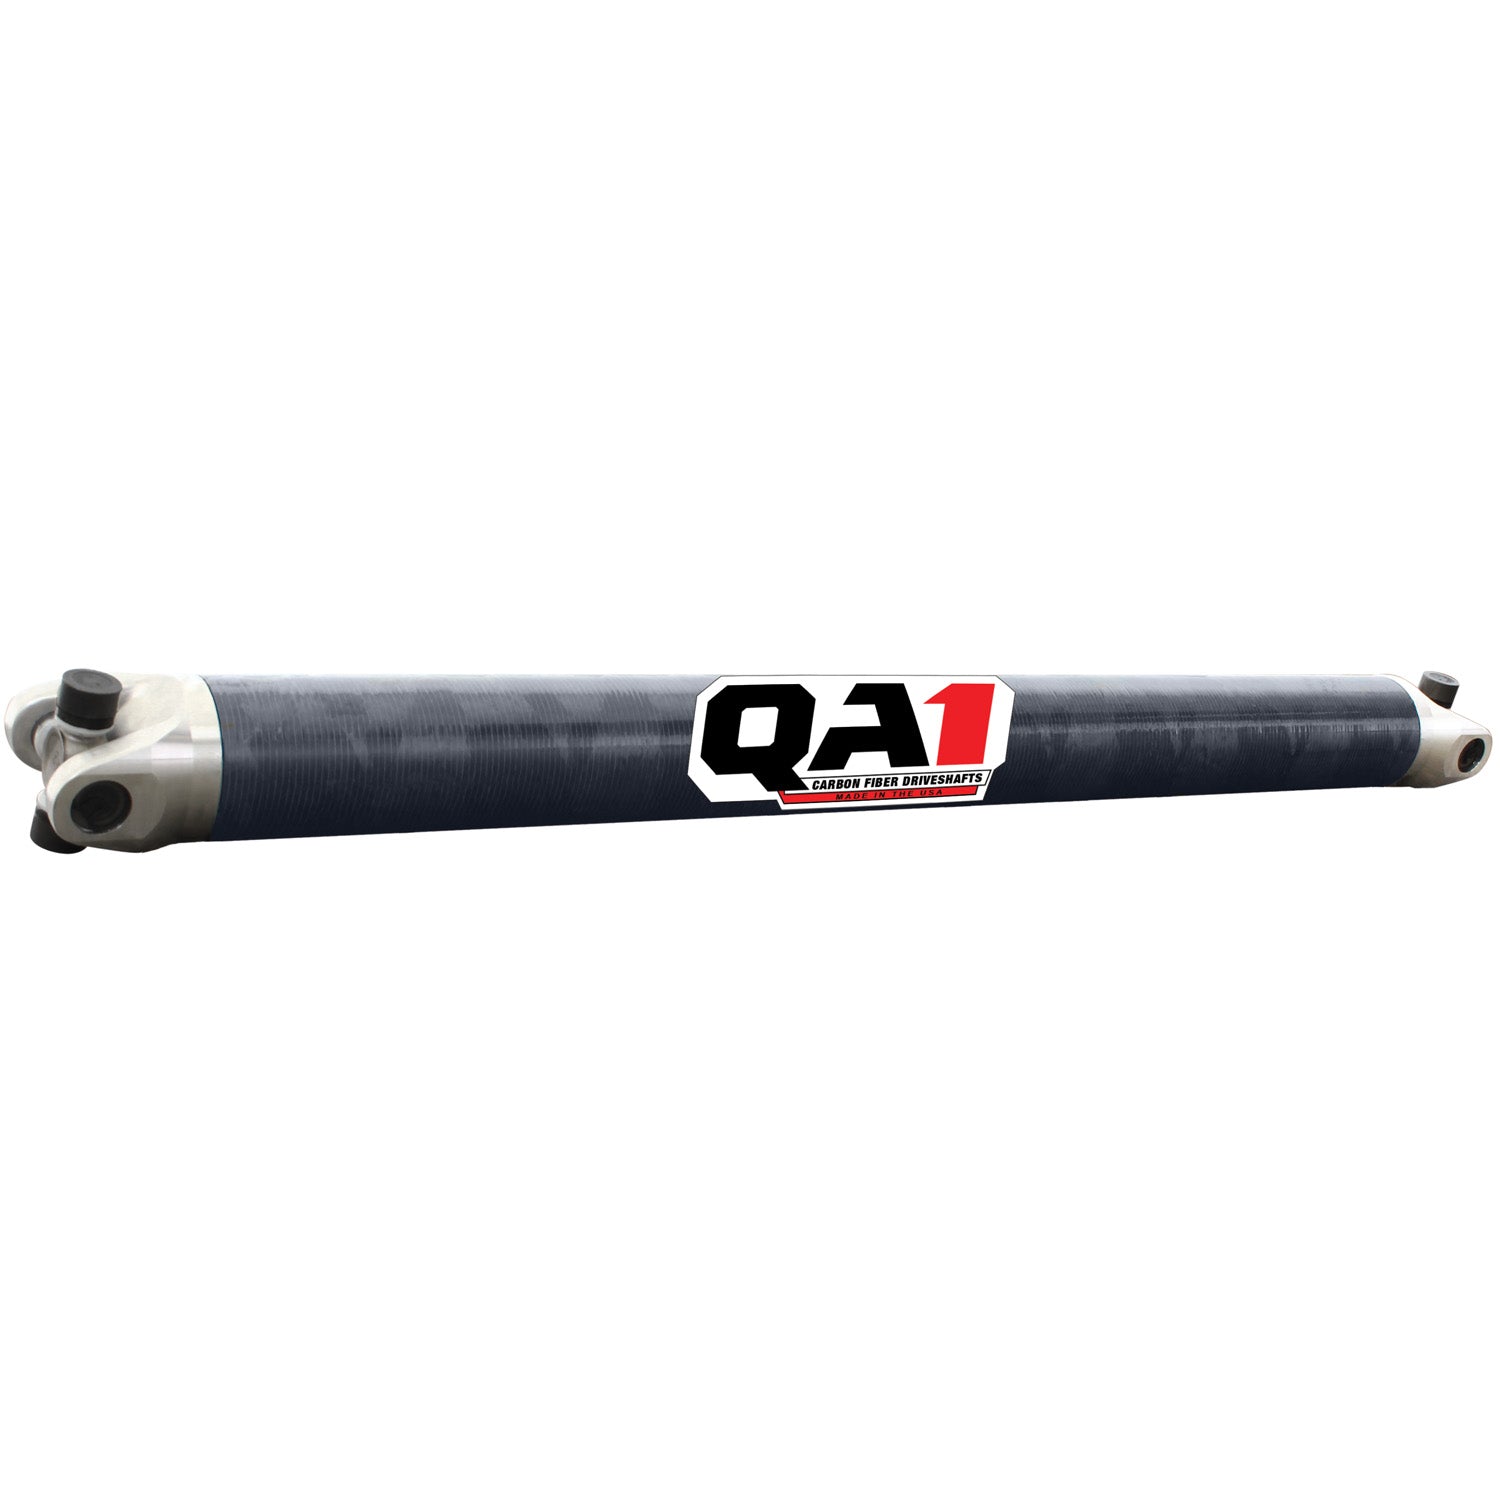 QA1 JJ-11230 Driveshaft, Cf, Ct-Dirt LM, 35.50 XM 3.2, 1310 U-Joint, 2600Lb.